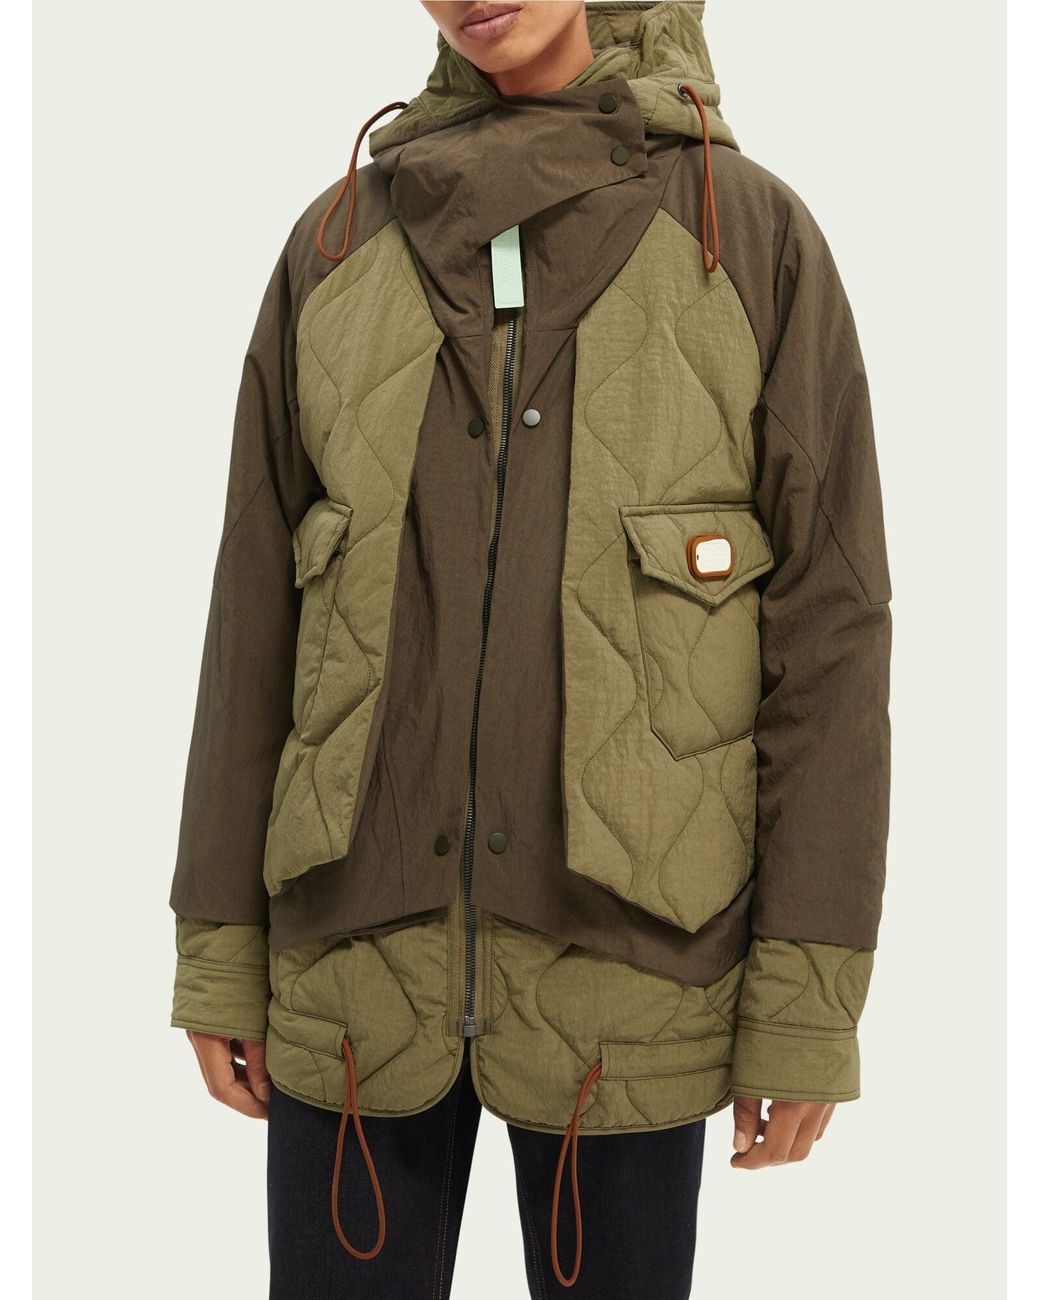 Rains short hooded coat in khaki | ASOS